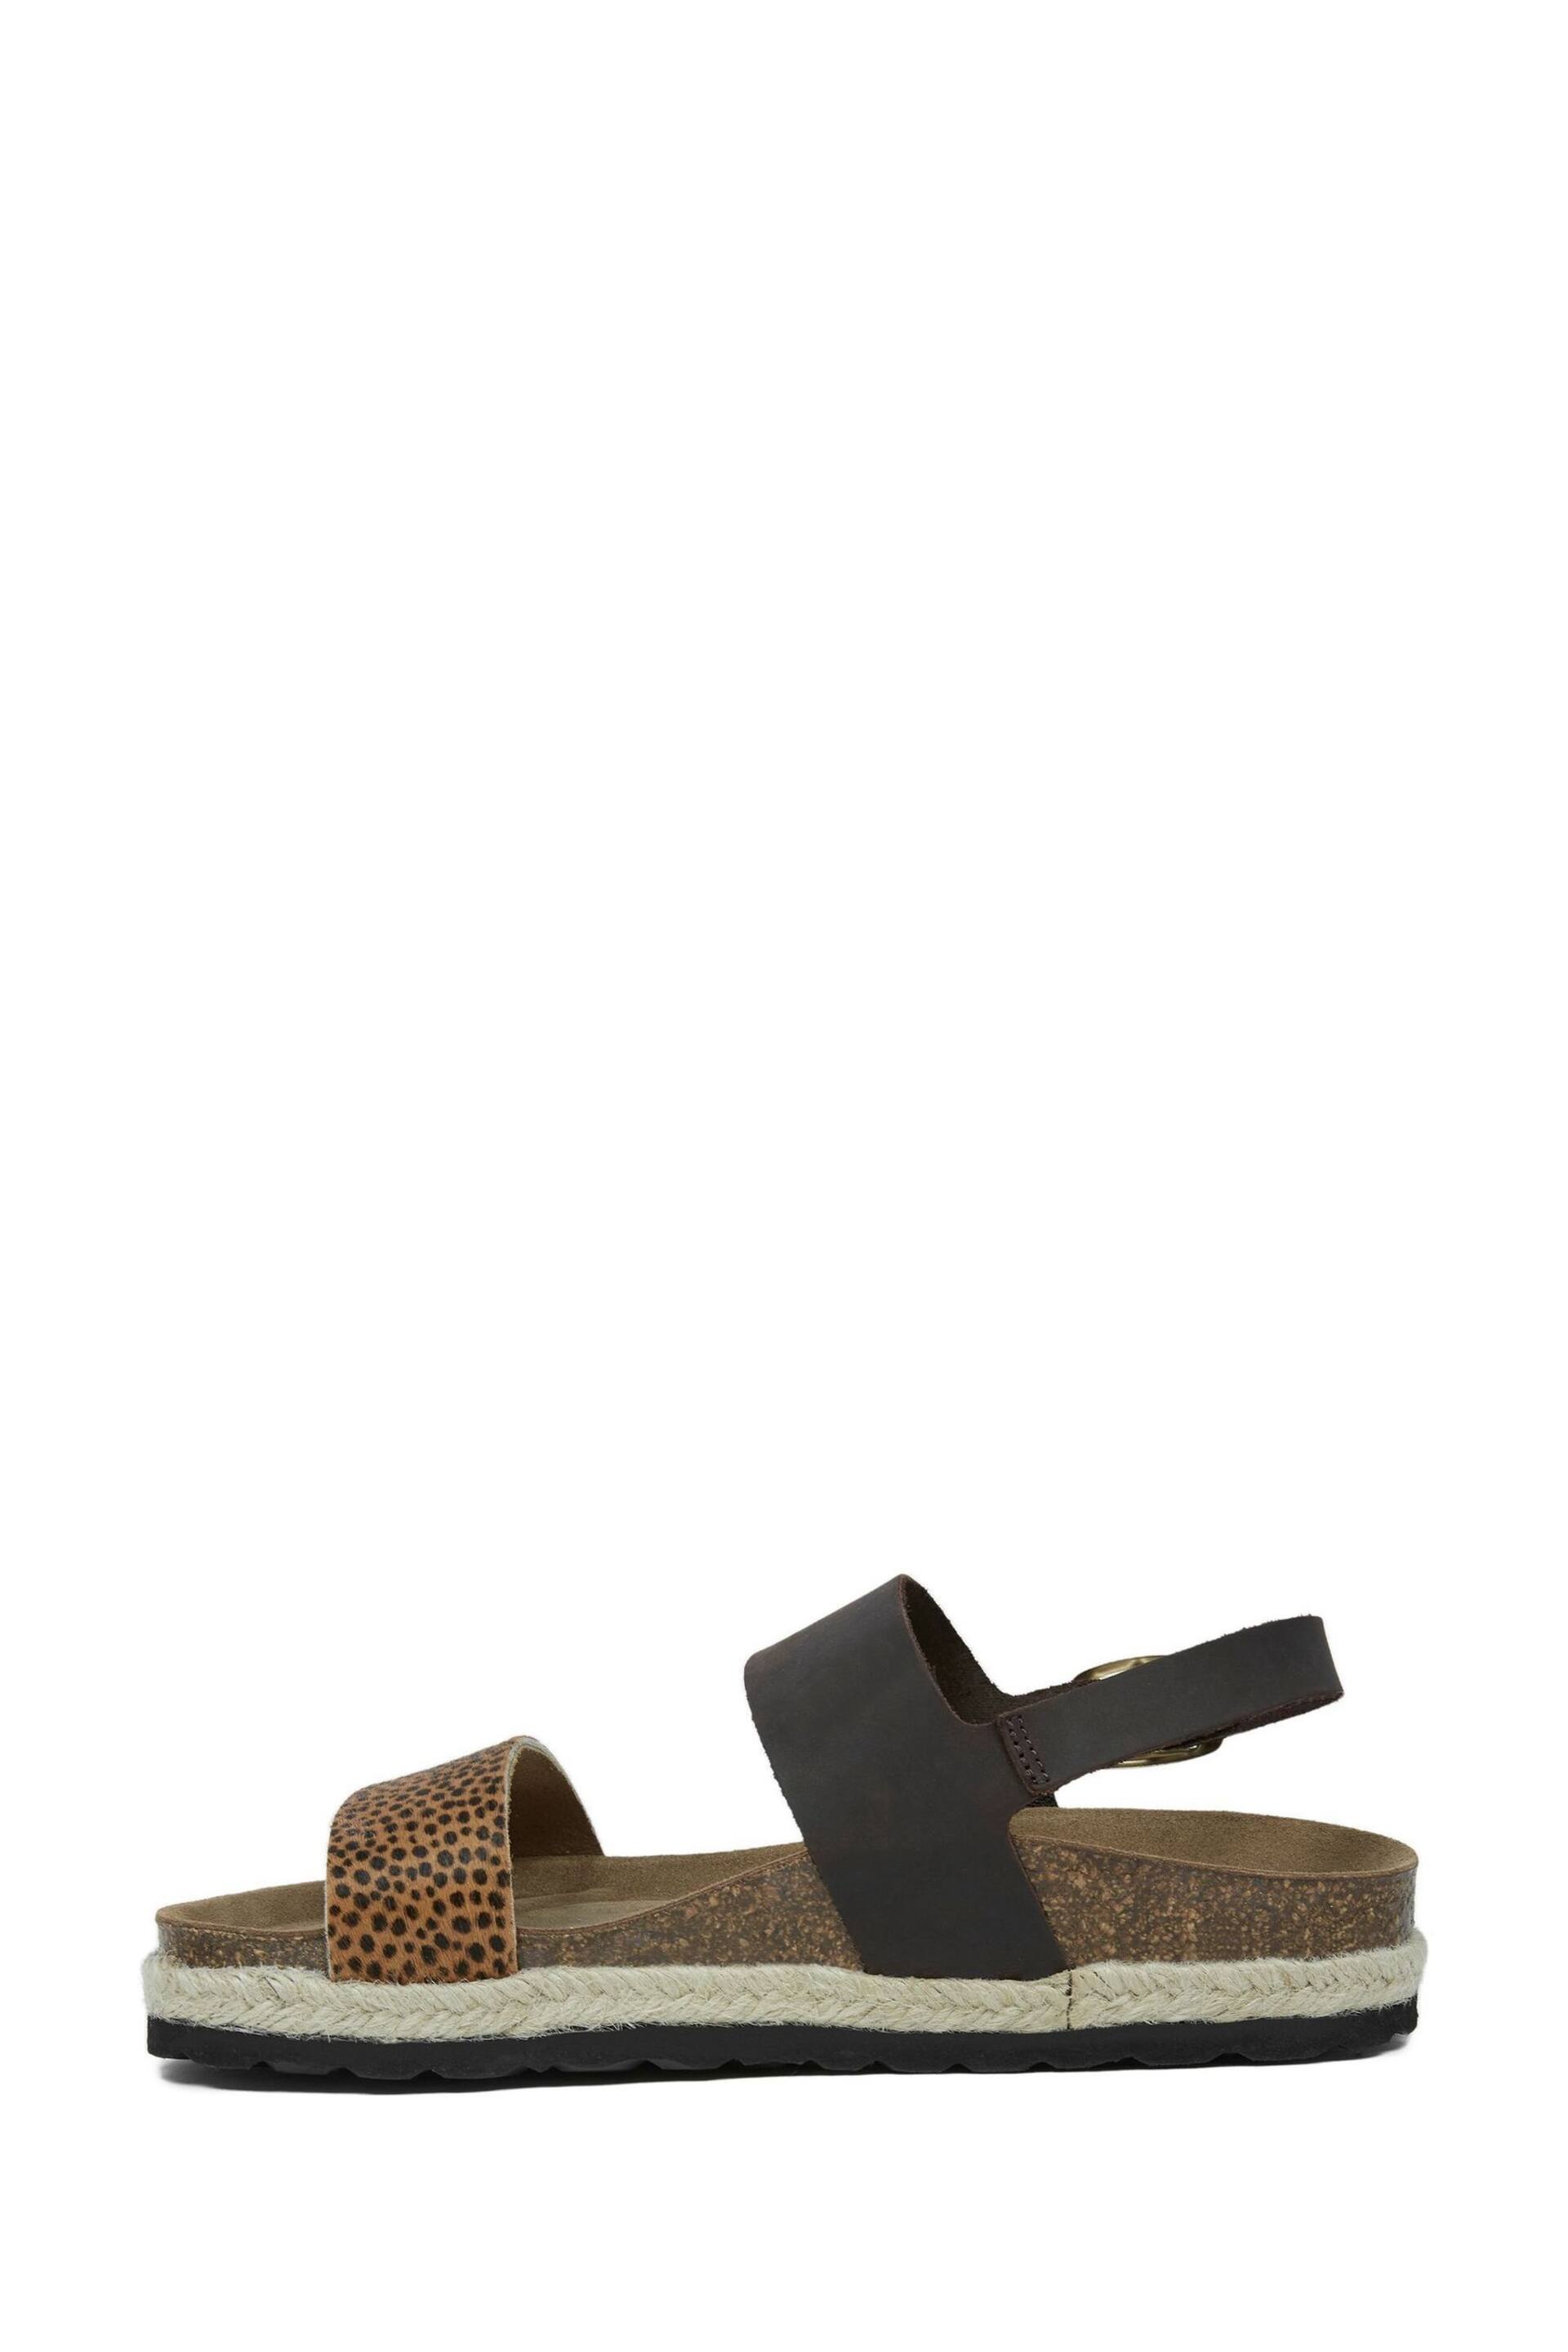 Celtic & Co. Brown Strap Sandals - Image 3 of 6